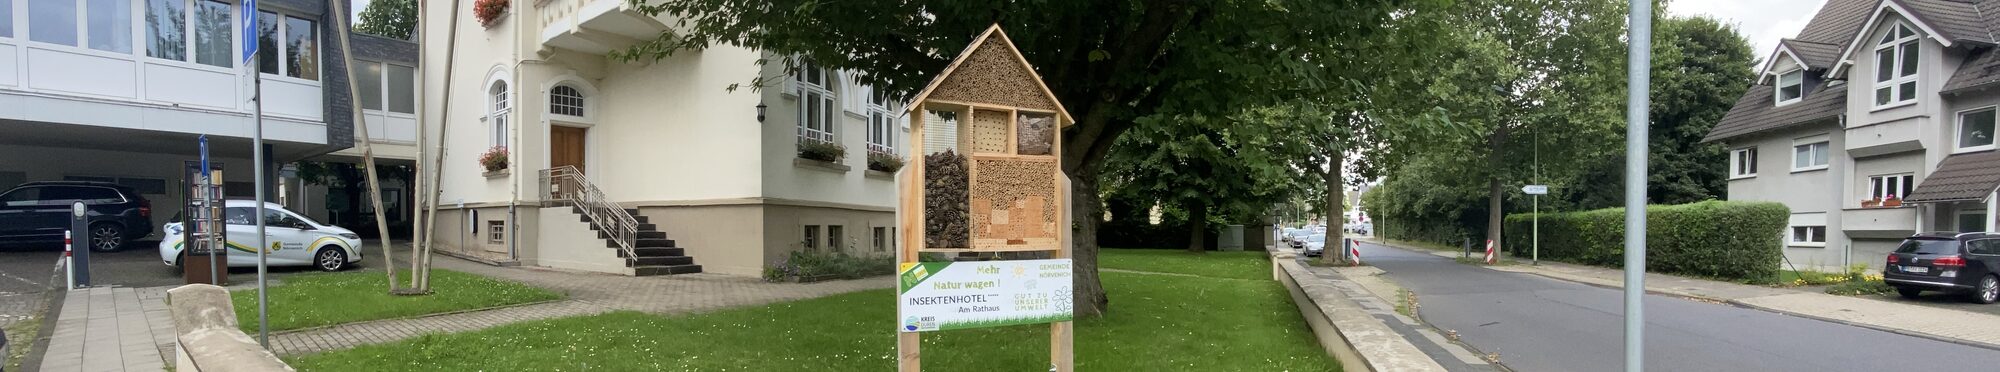 Insektenhotel Rathaus